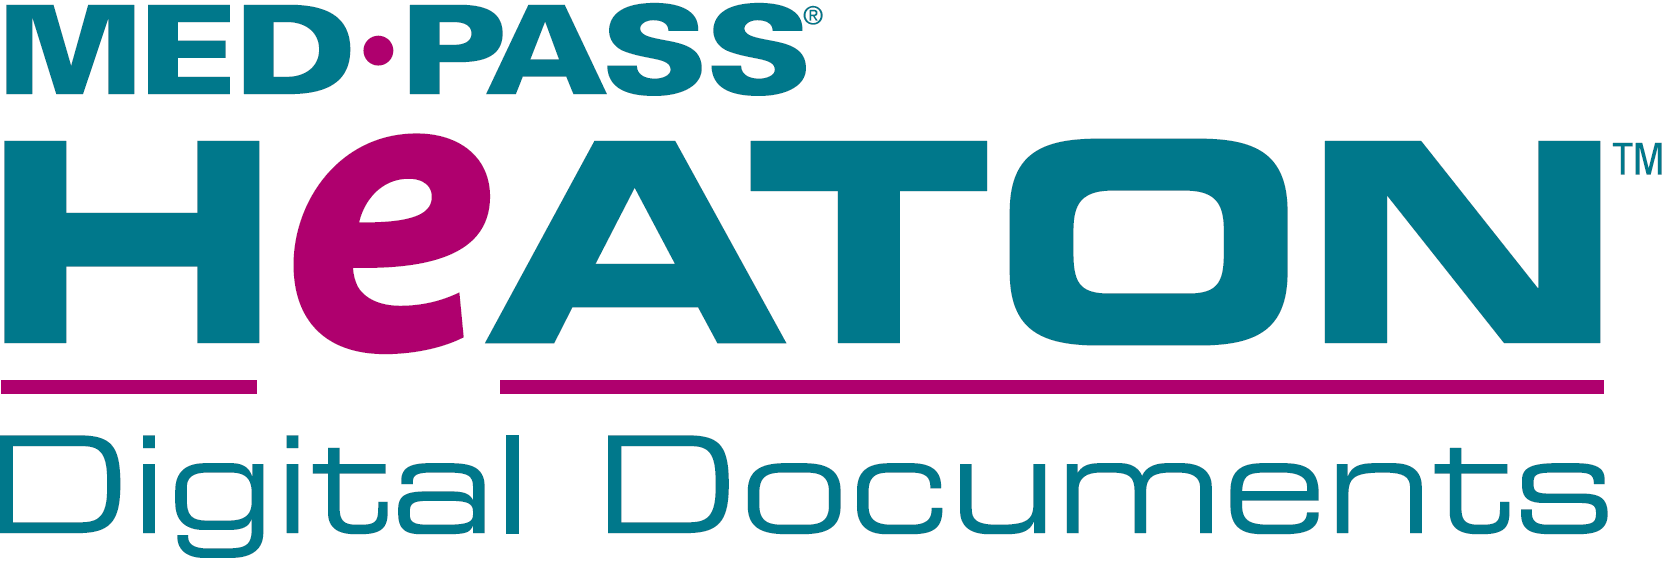 MED-PASS Heaton Digital Documents